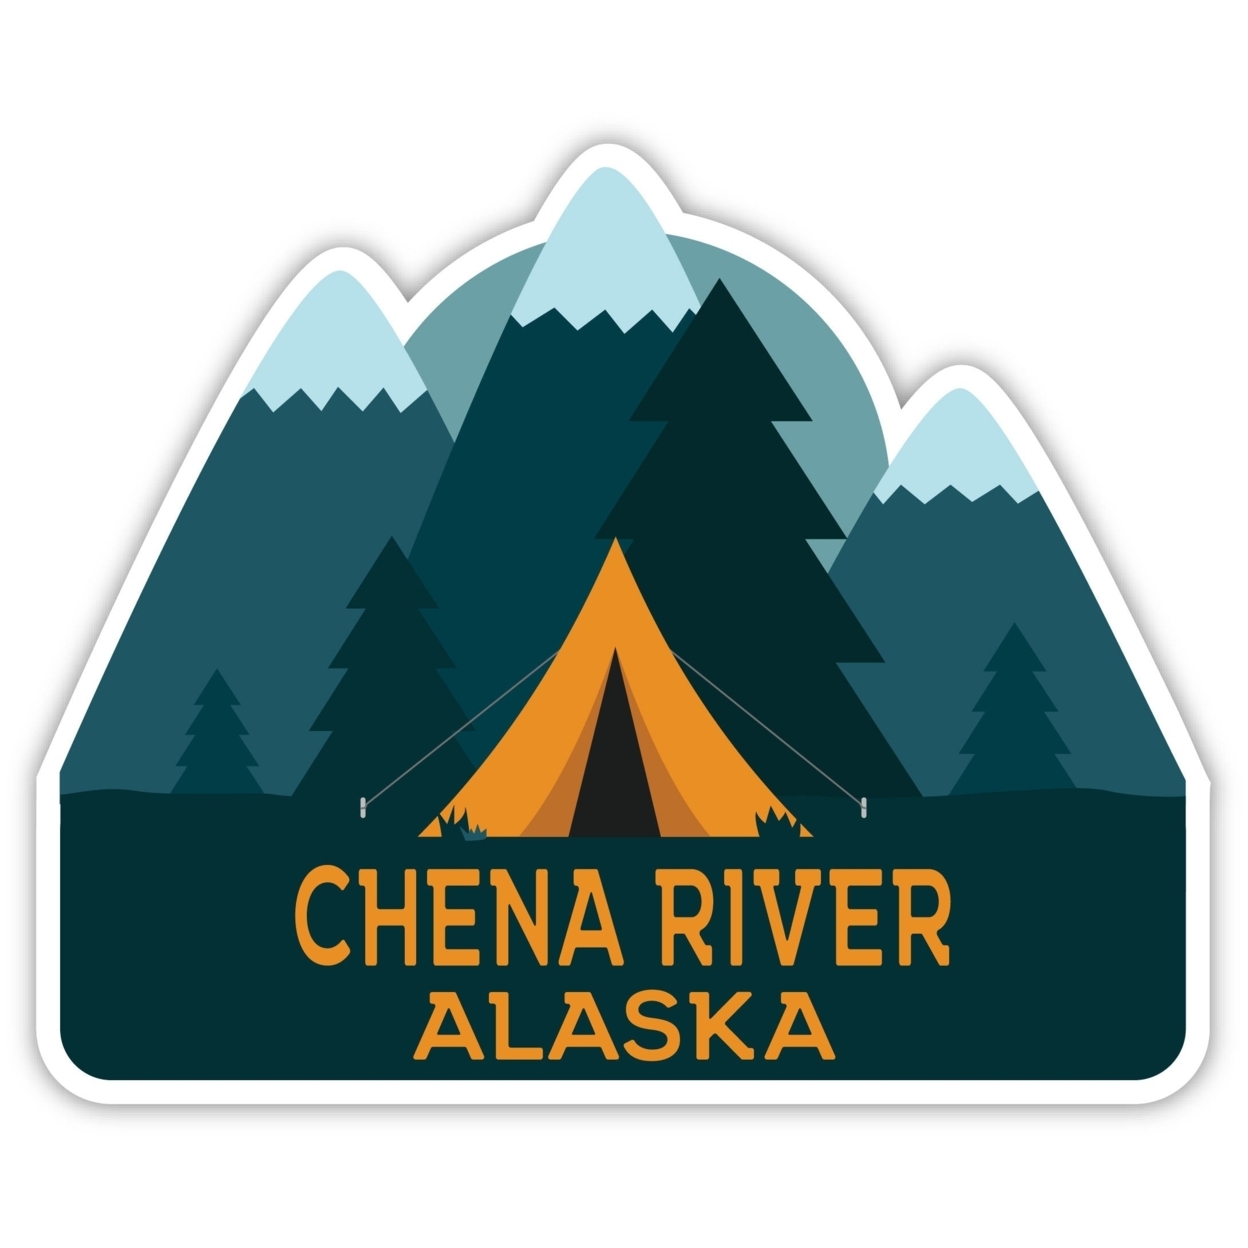 Chena River Alaska Souvenir Decorative Stickers (Choose Theme And Size) - 4-Pack, 4-Inch, Tent